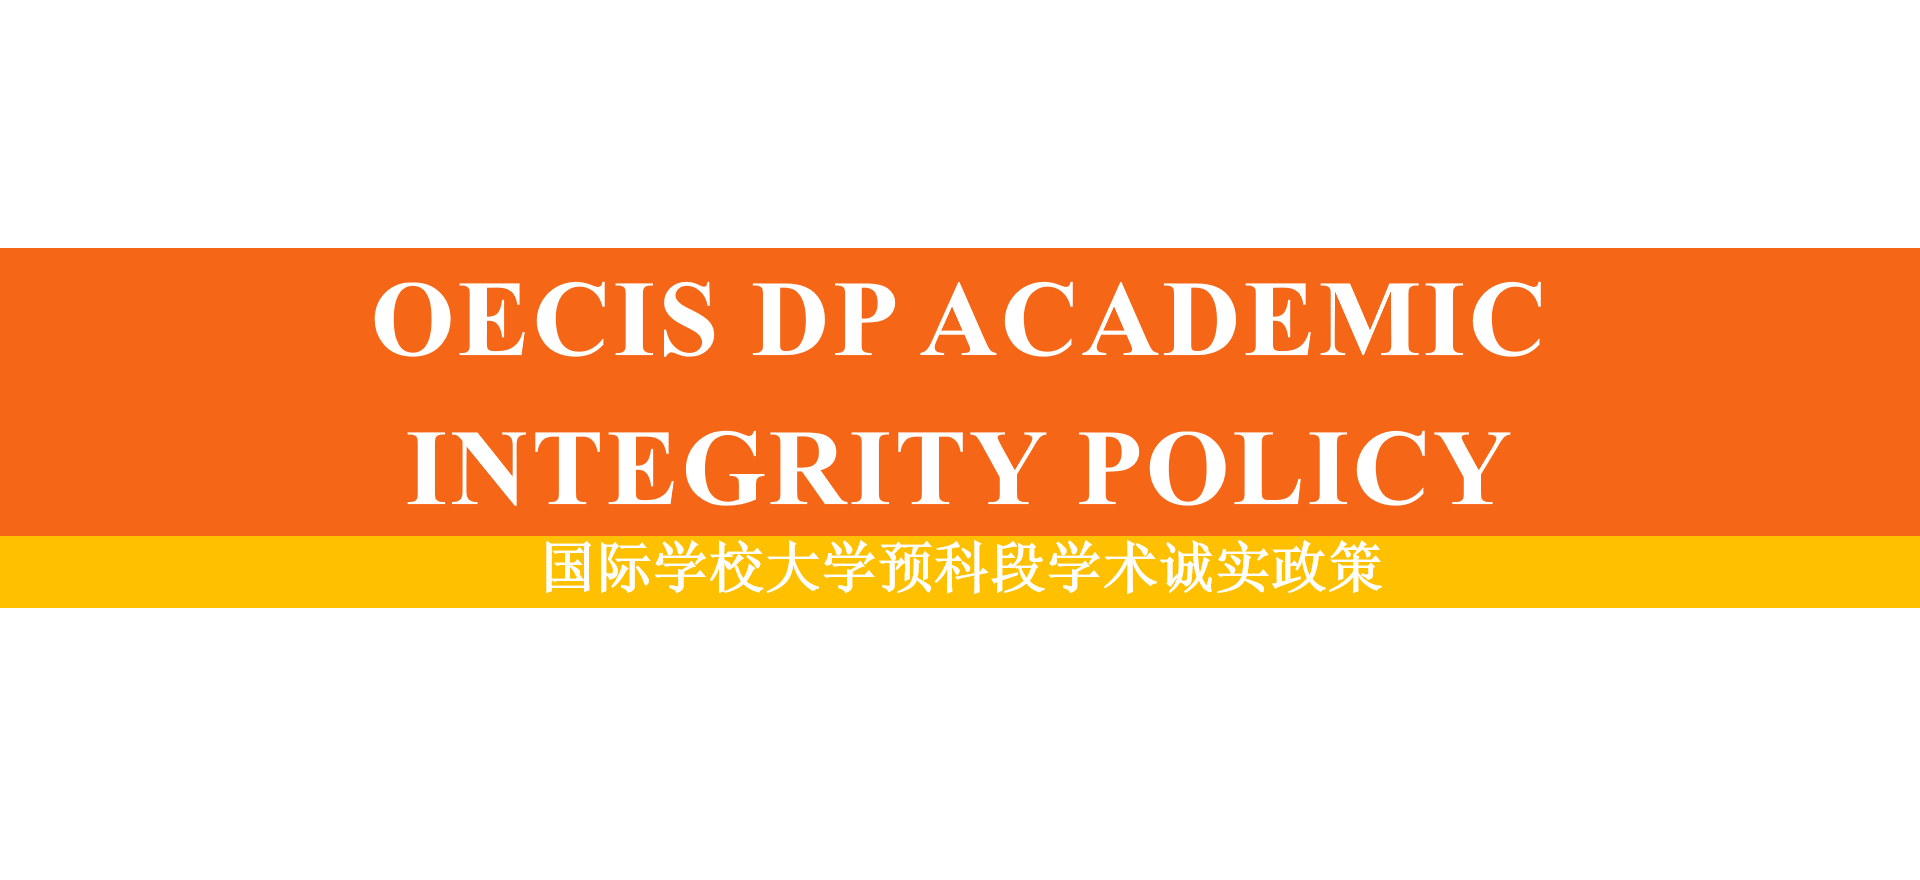 OECIS DP Academic Integrity Policy 国际学校大学预科段学术诚实政策